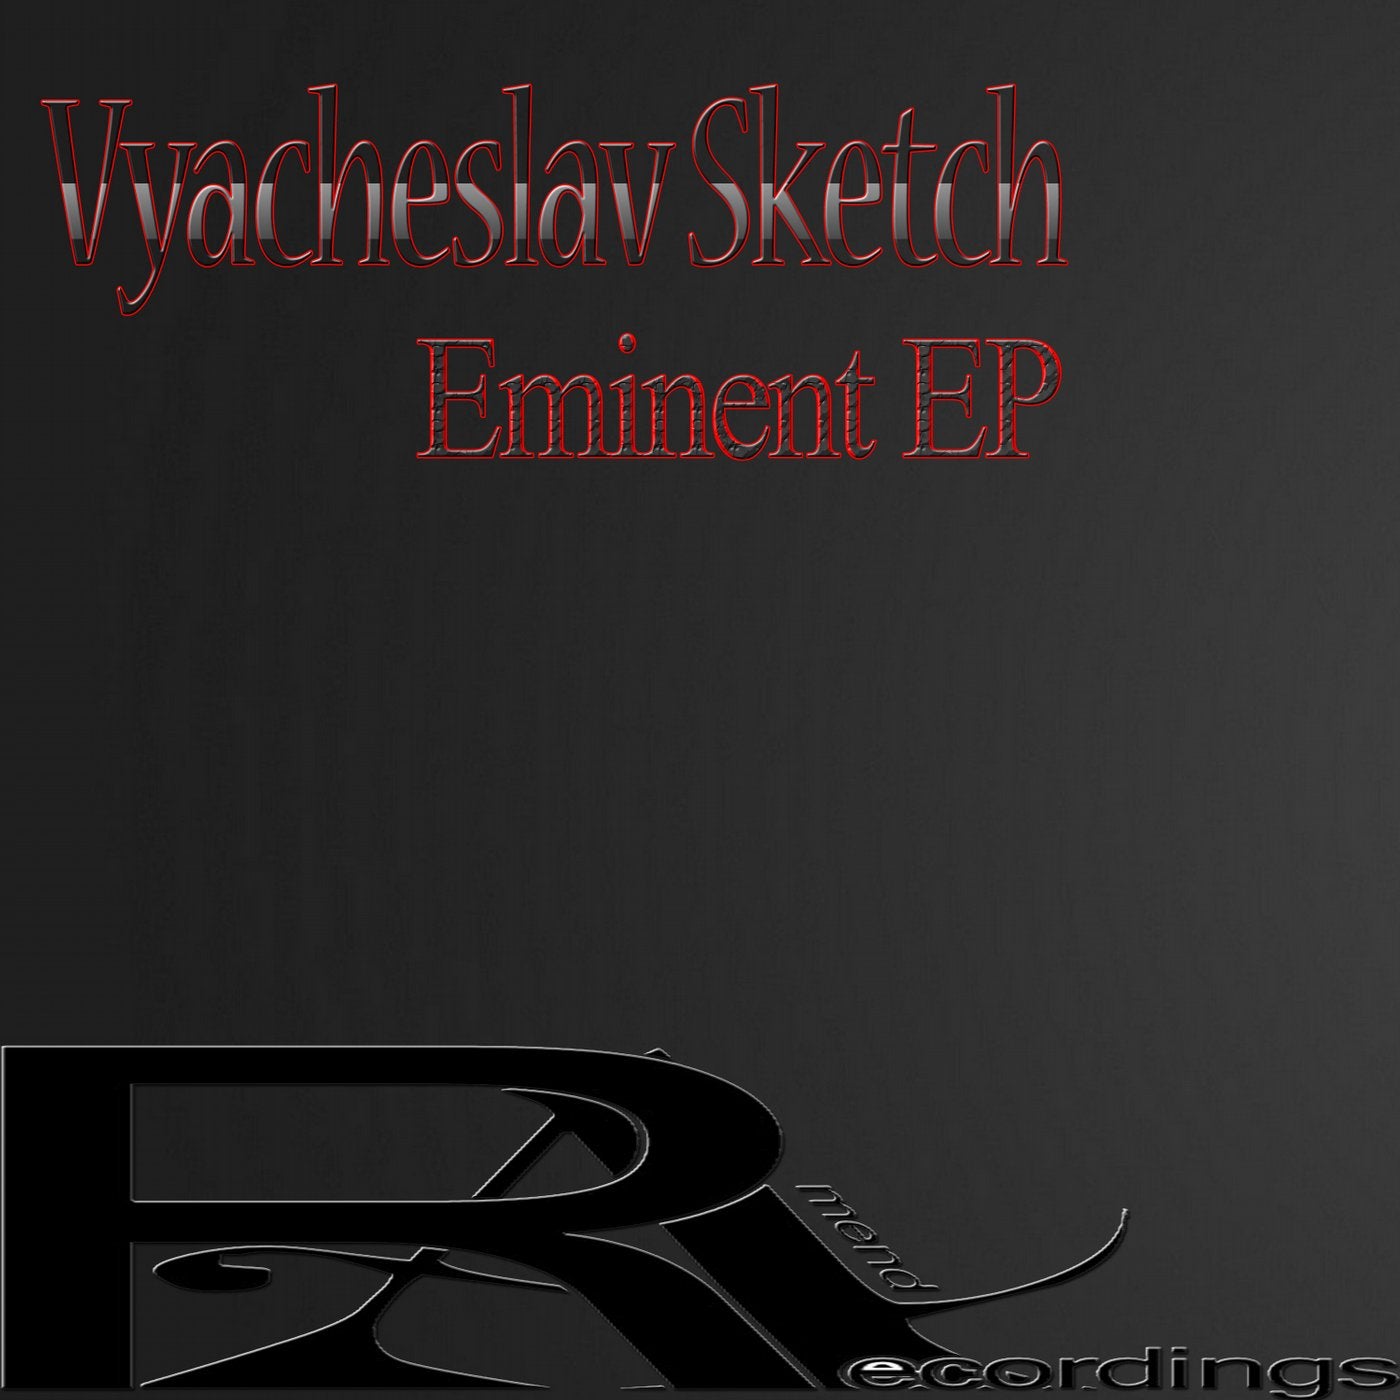 Eminent EP